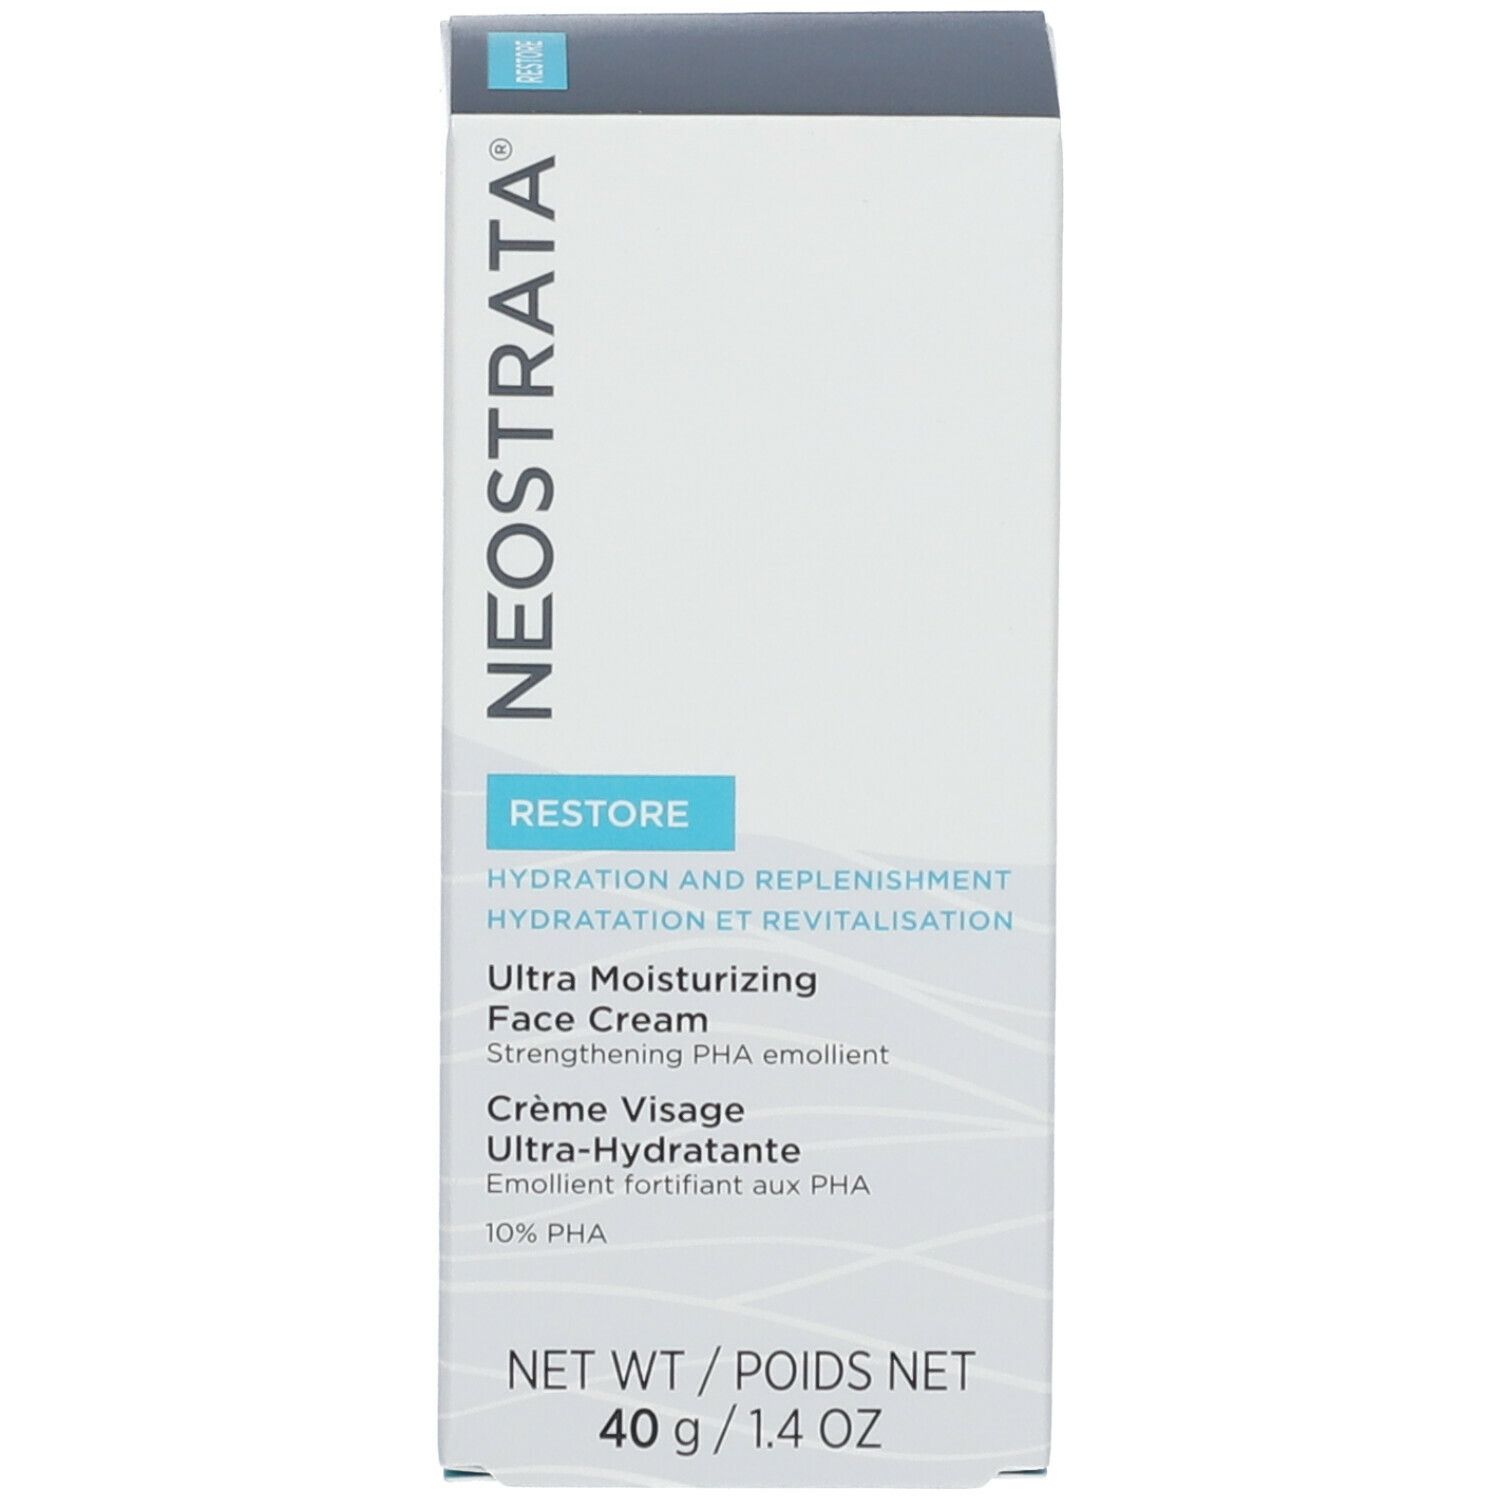 NeoStrata® Restore Ultra Moisturizing Face Cream 10 PHA